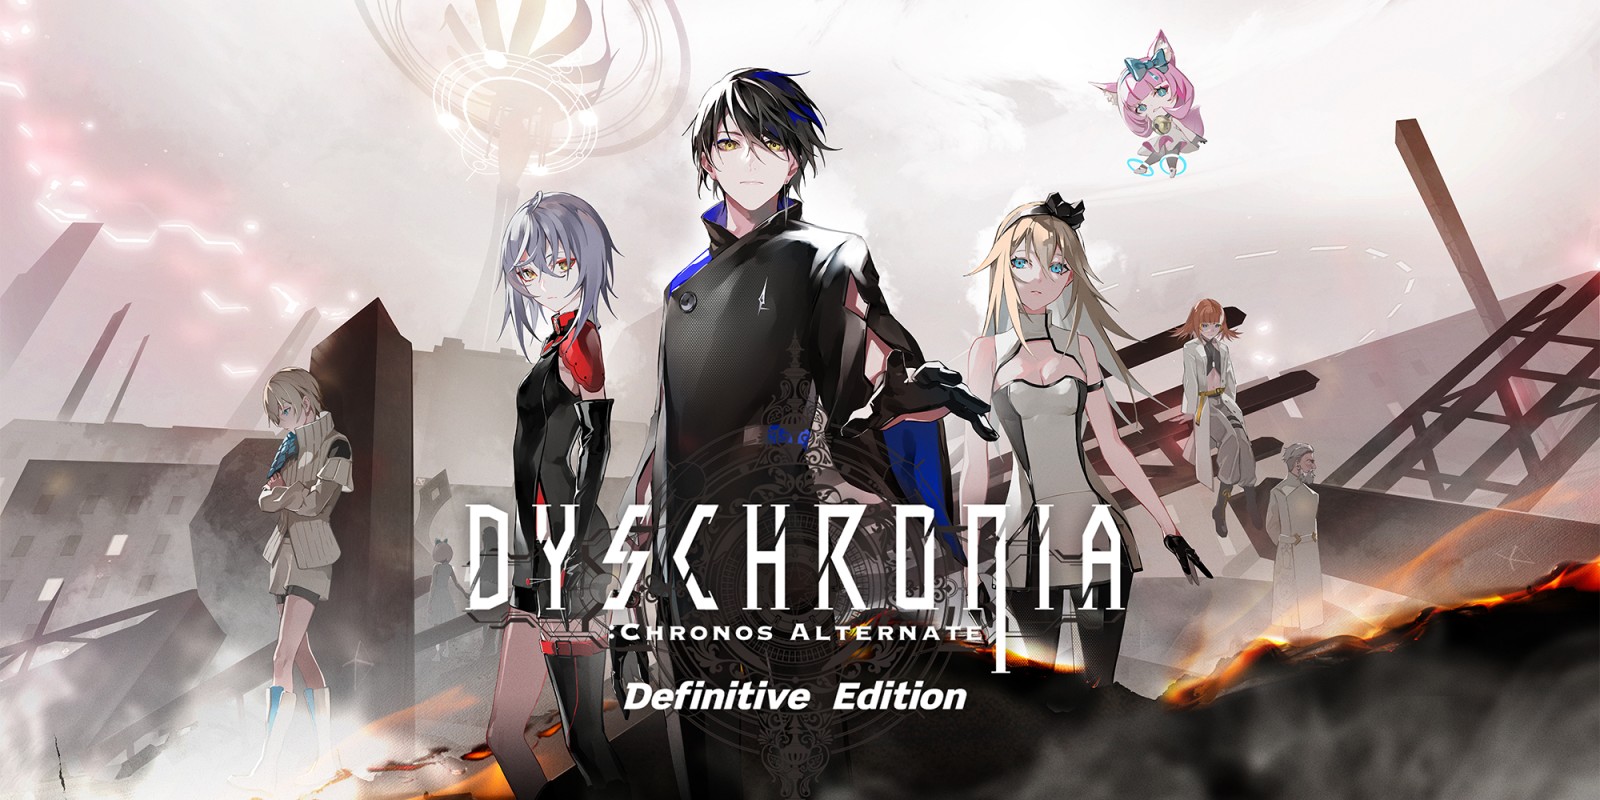 DYSCHRONIA: Chronos Alternate - Definitive Edition